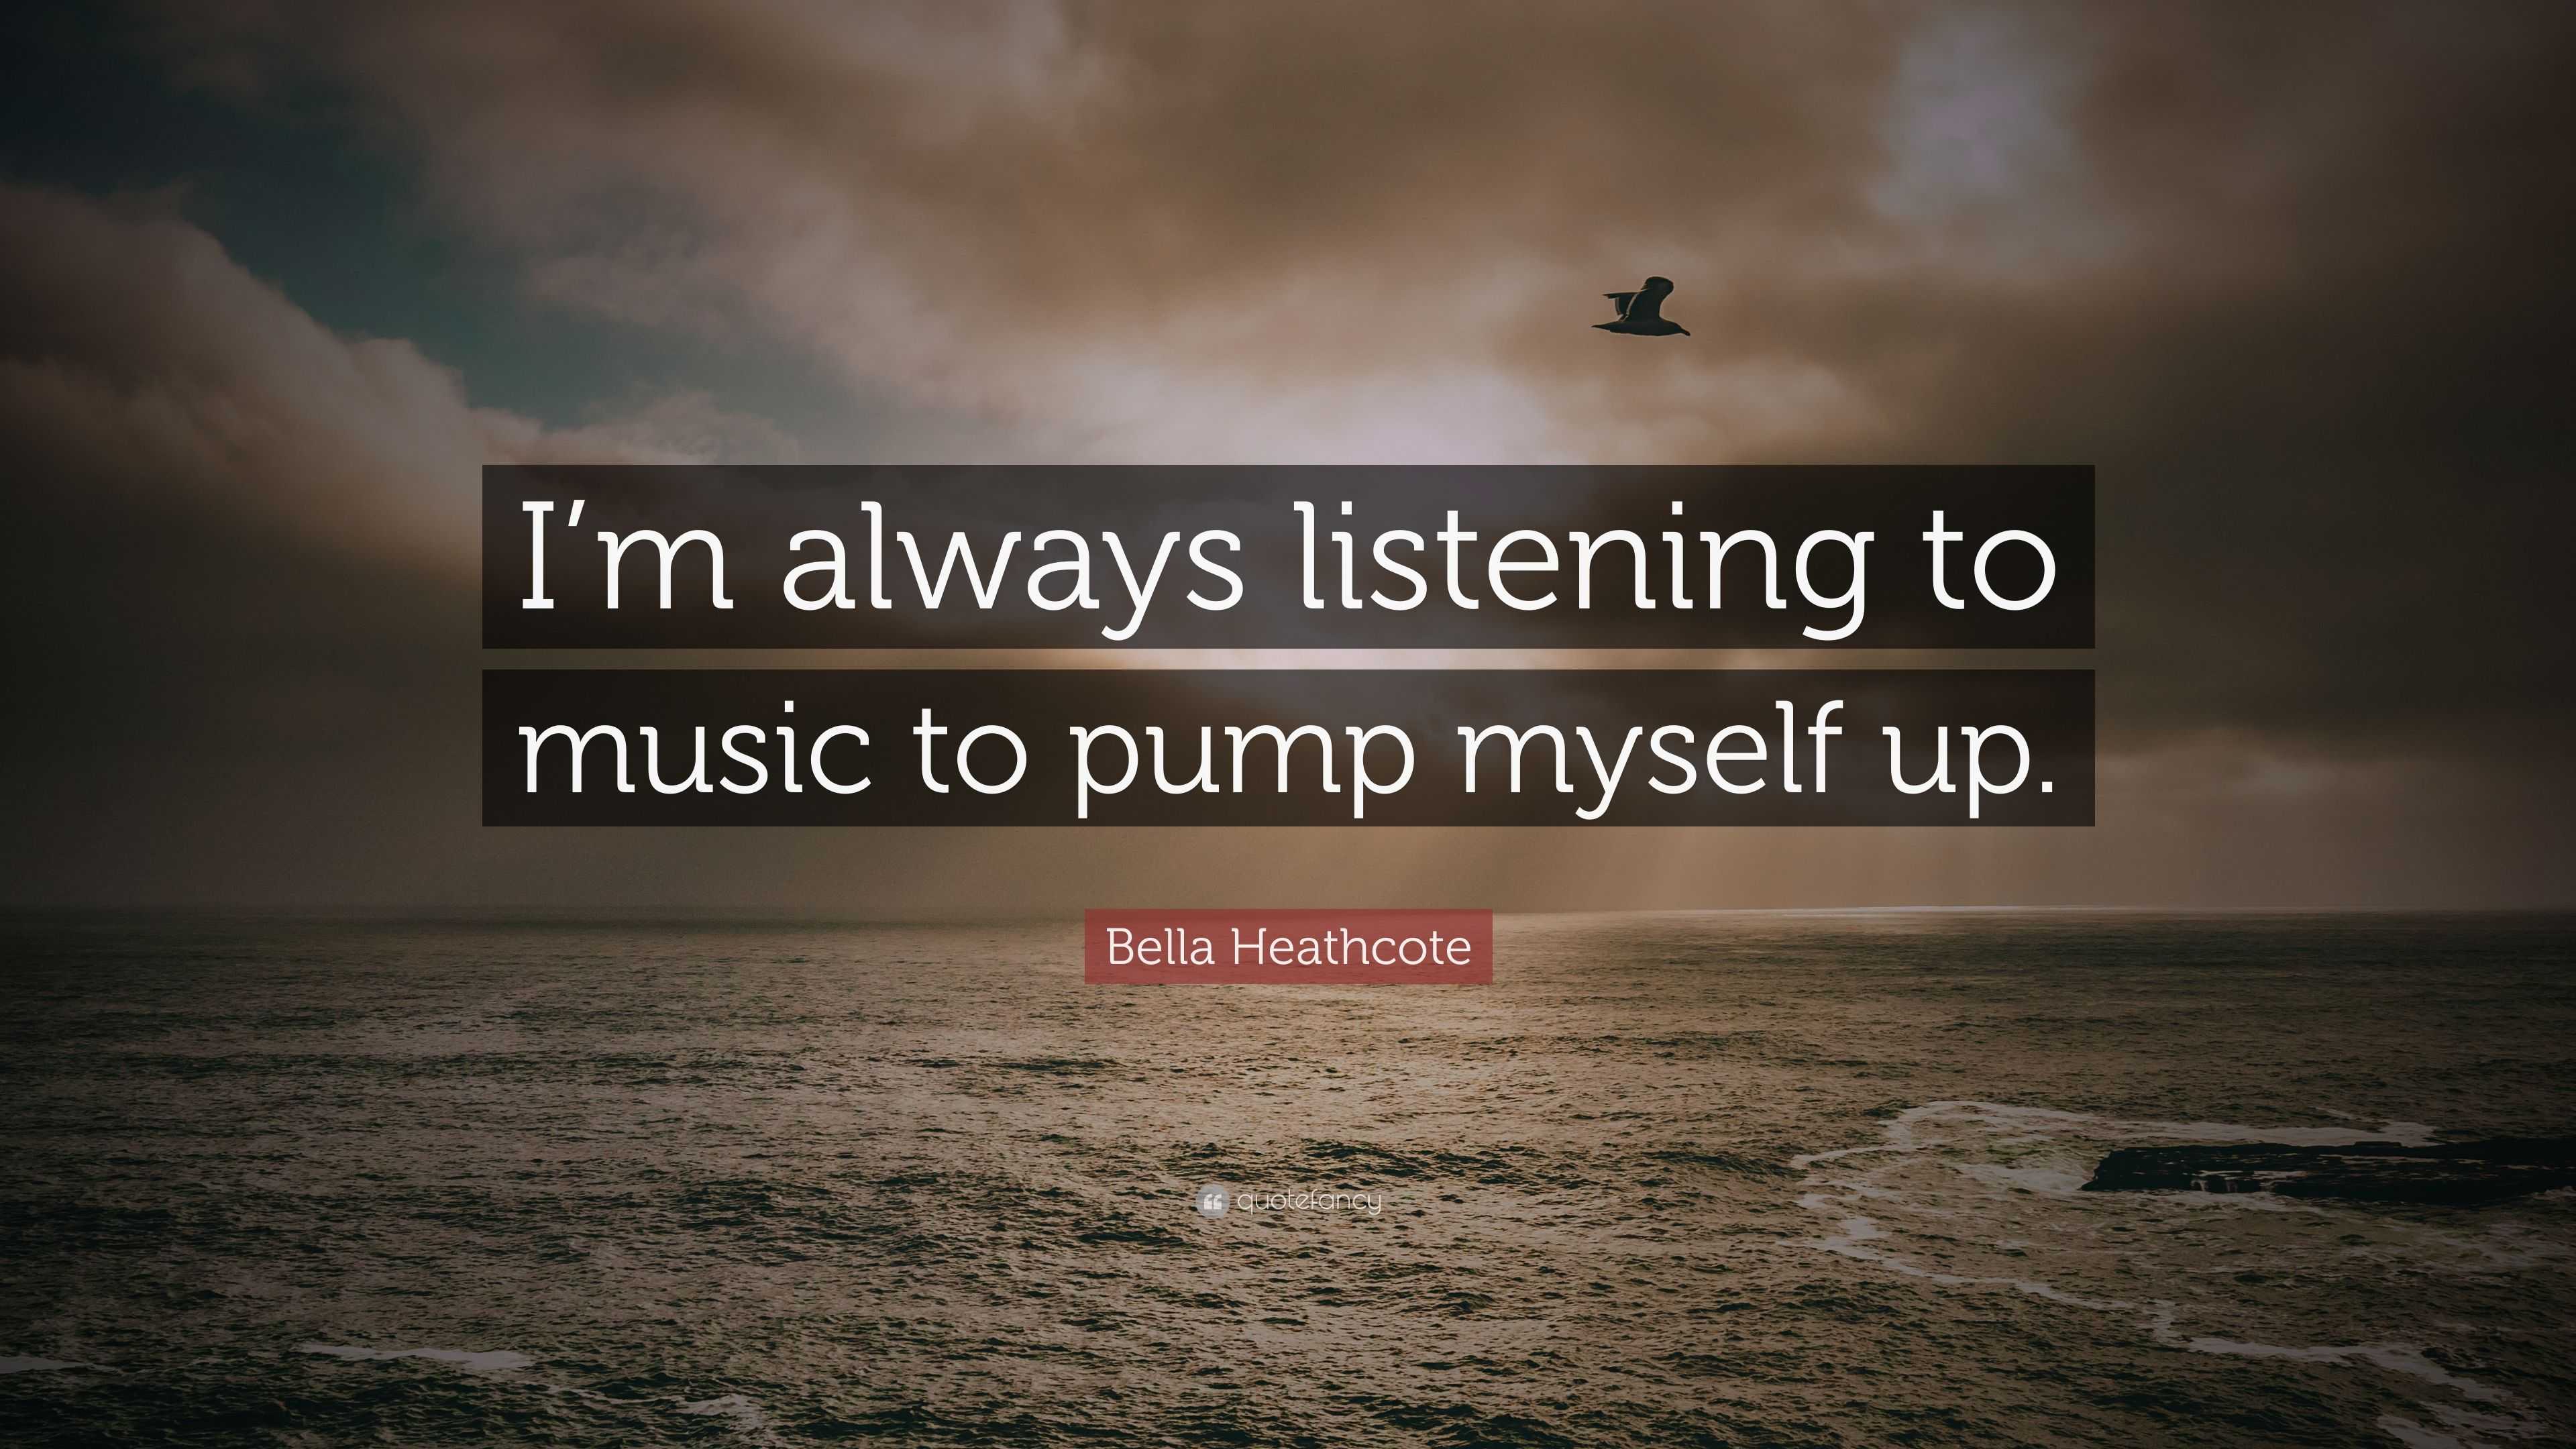 Bella Heathcote Quote: “I'm always listening to music to pump myself up.”